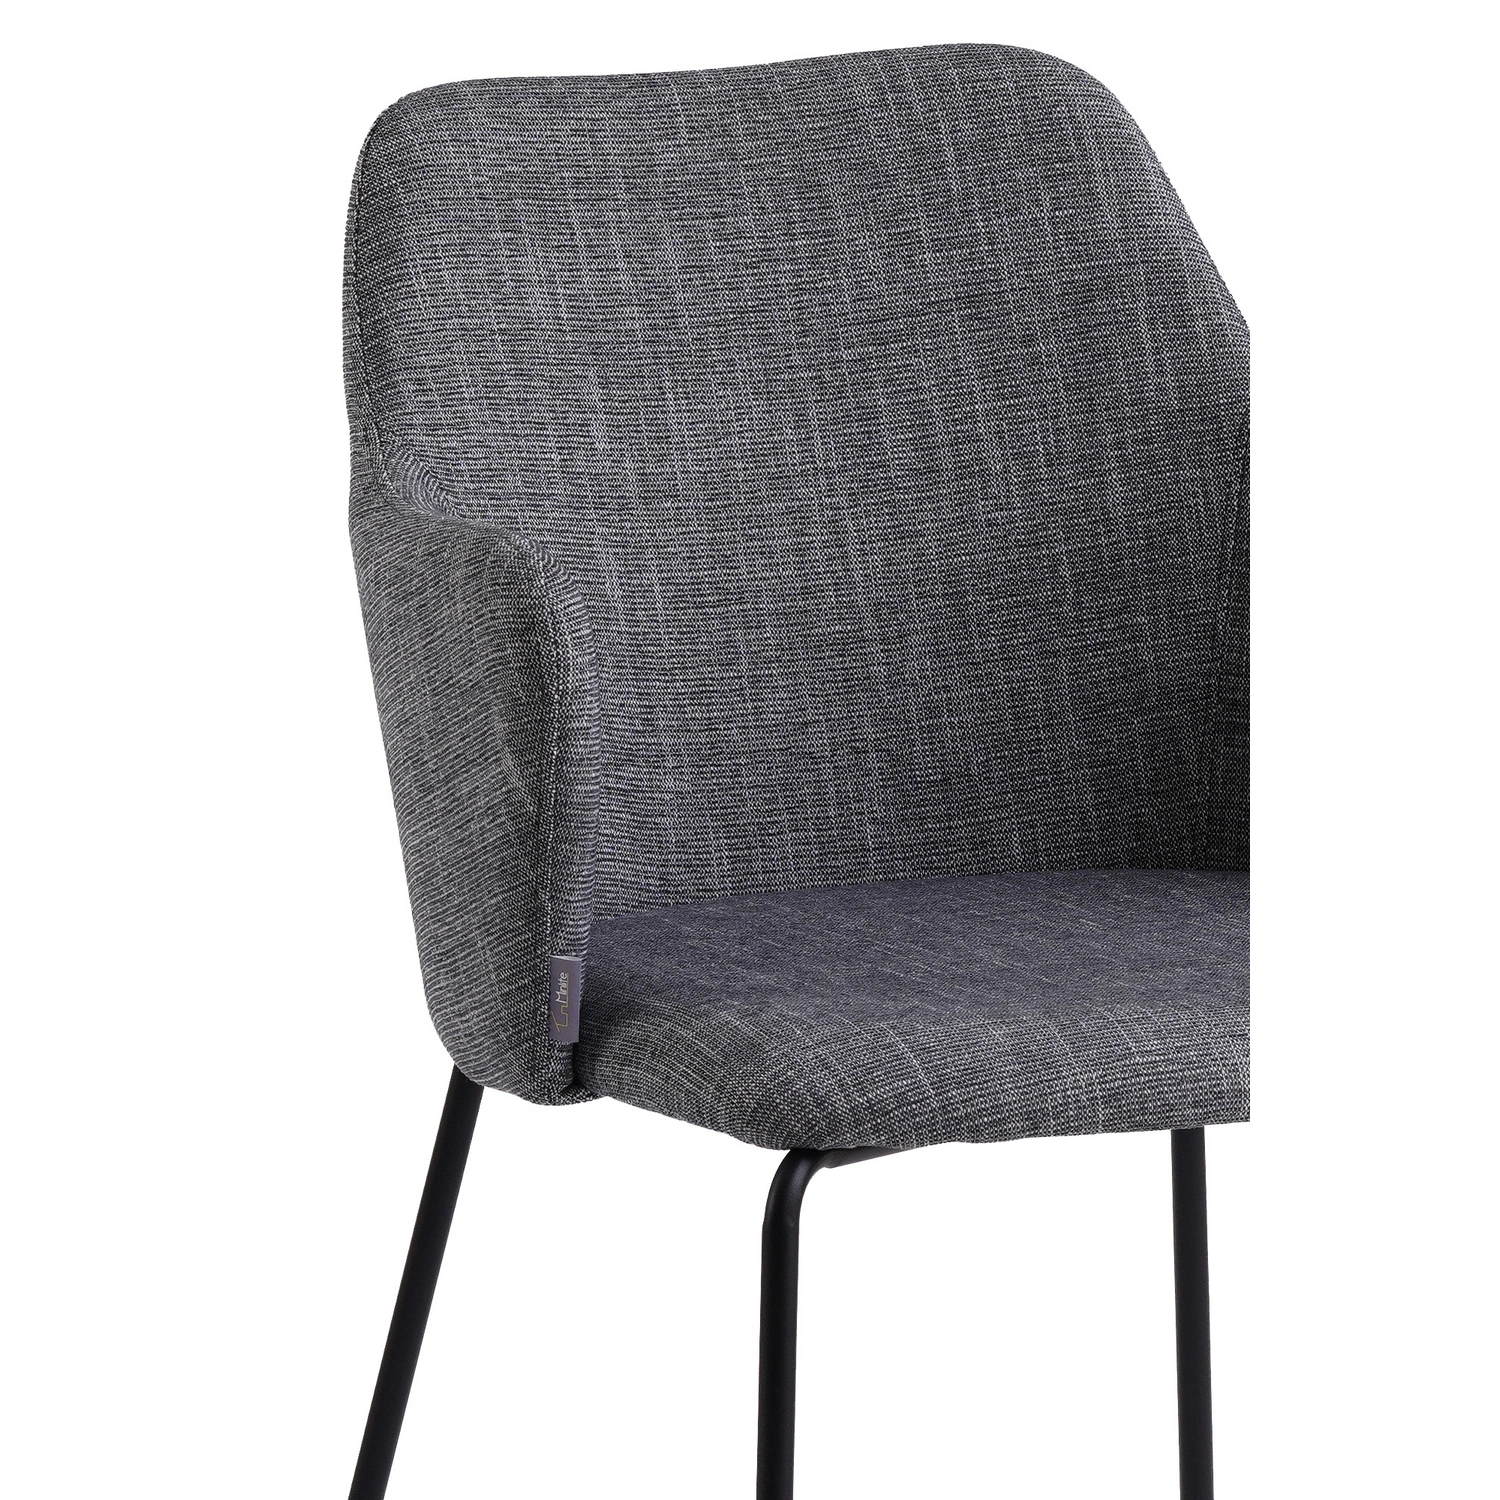 SalesFever Stuhl, Höhe: 85 cm, grau/schwarz, 2 stk